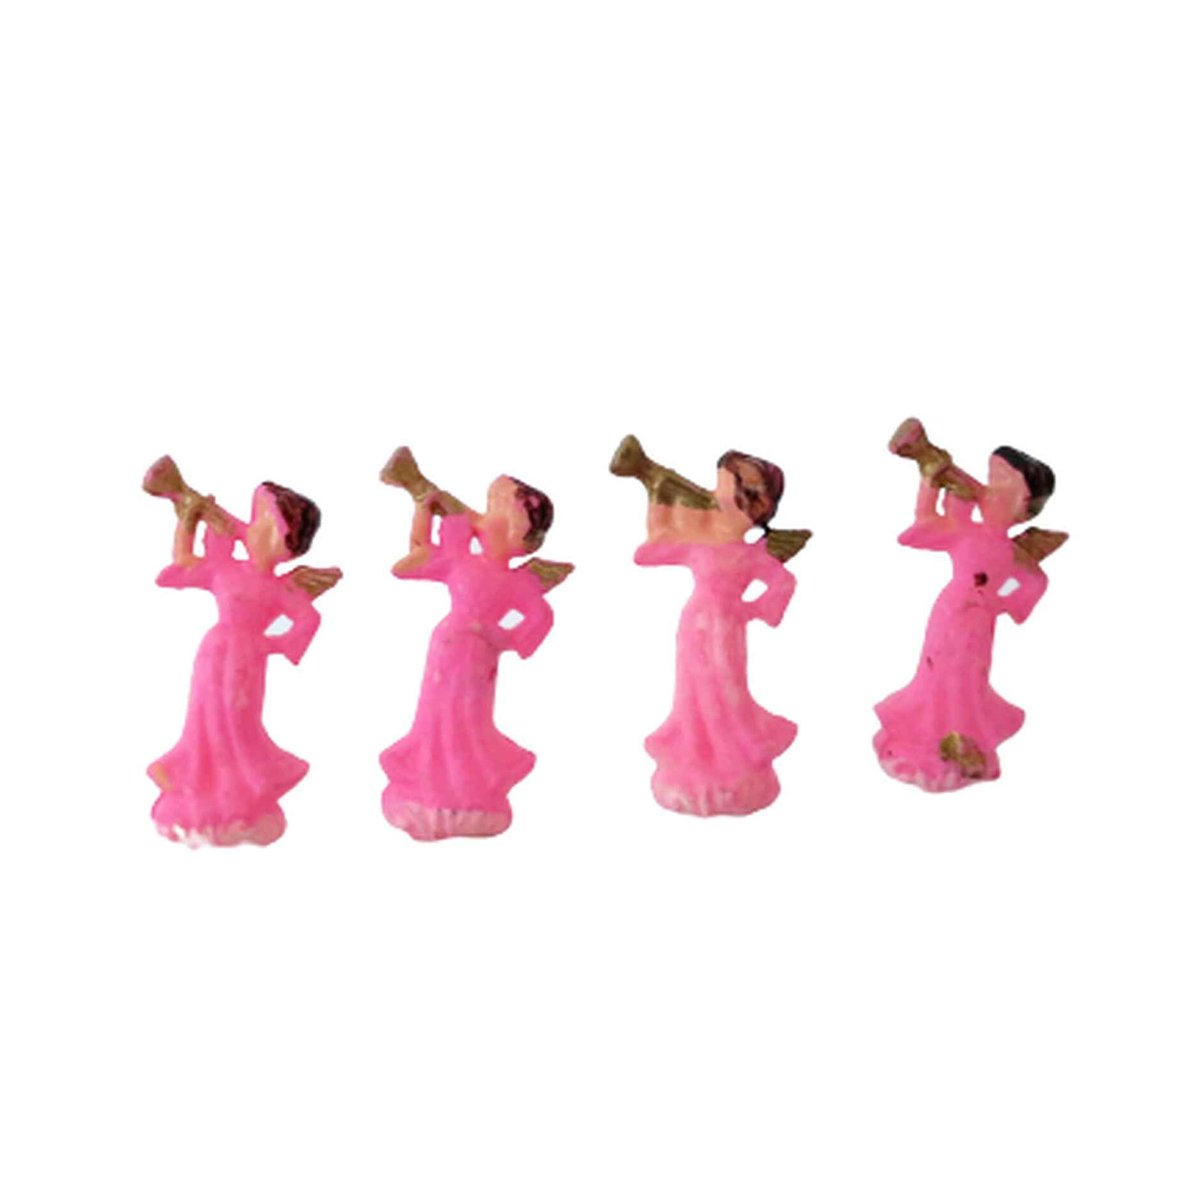 4 Vintage Micro Mini Pink Angels, Teeny Tiny Angel Figurines with Wings tuppu.net/4feecafa #PinIt23 #SMILEtt23 #TMTinsta #EpiconEtsy